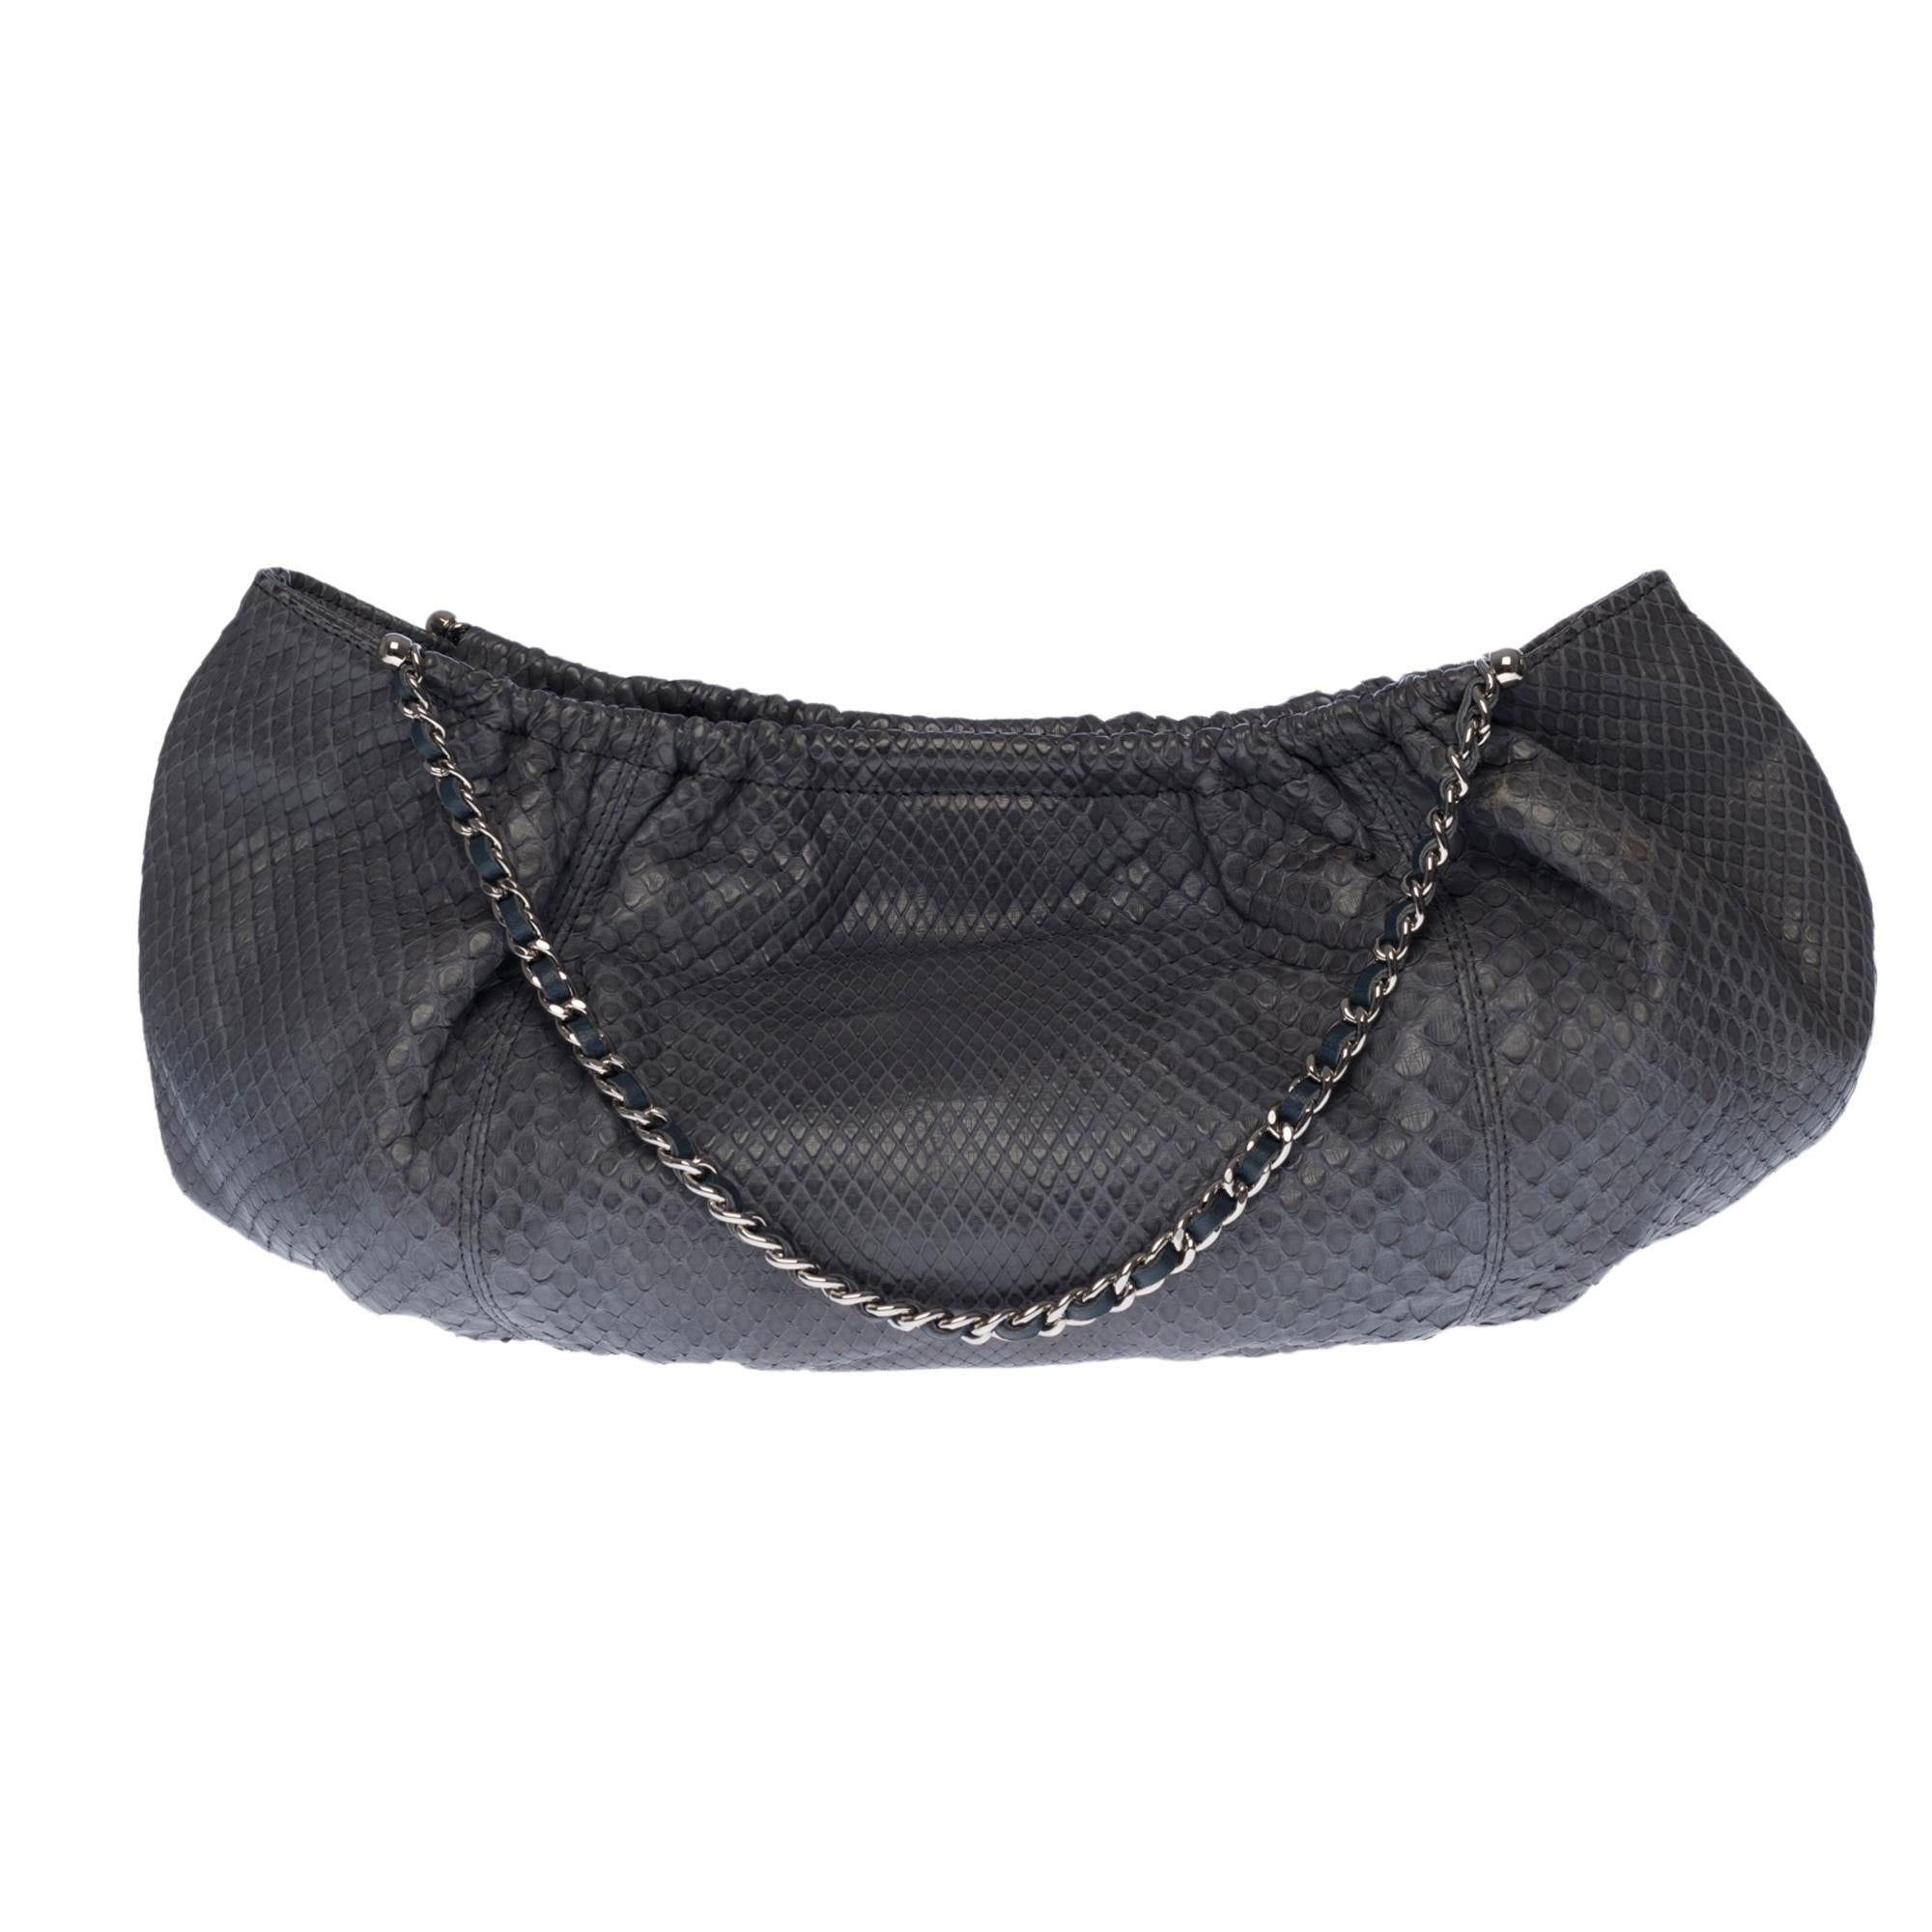 Black Chanel Classic shoulder bag in grey Python leather, silver hardware